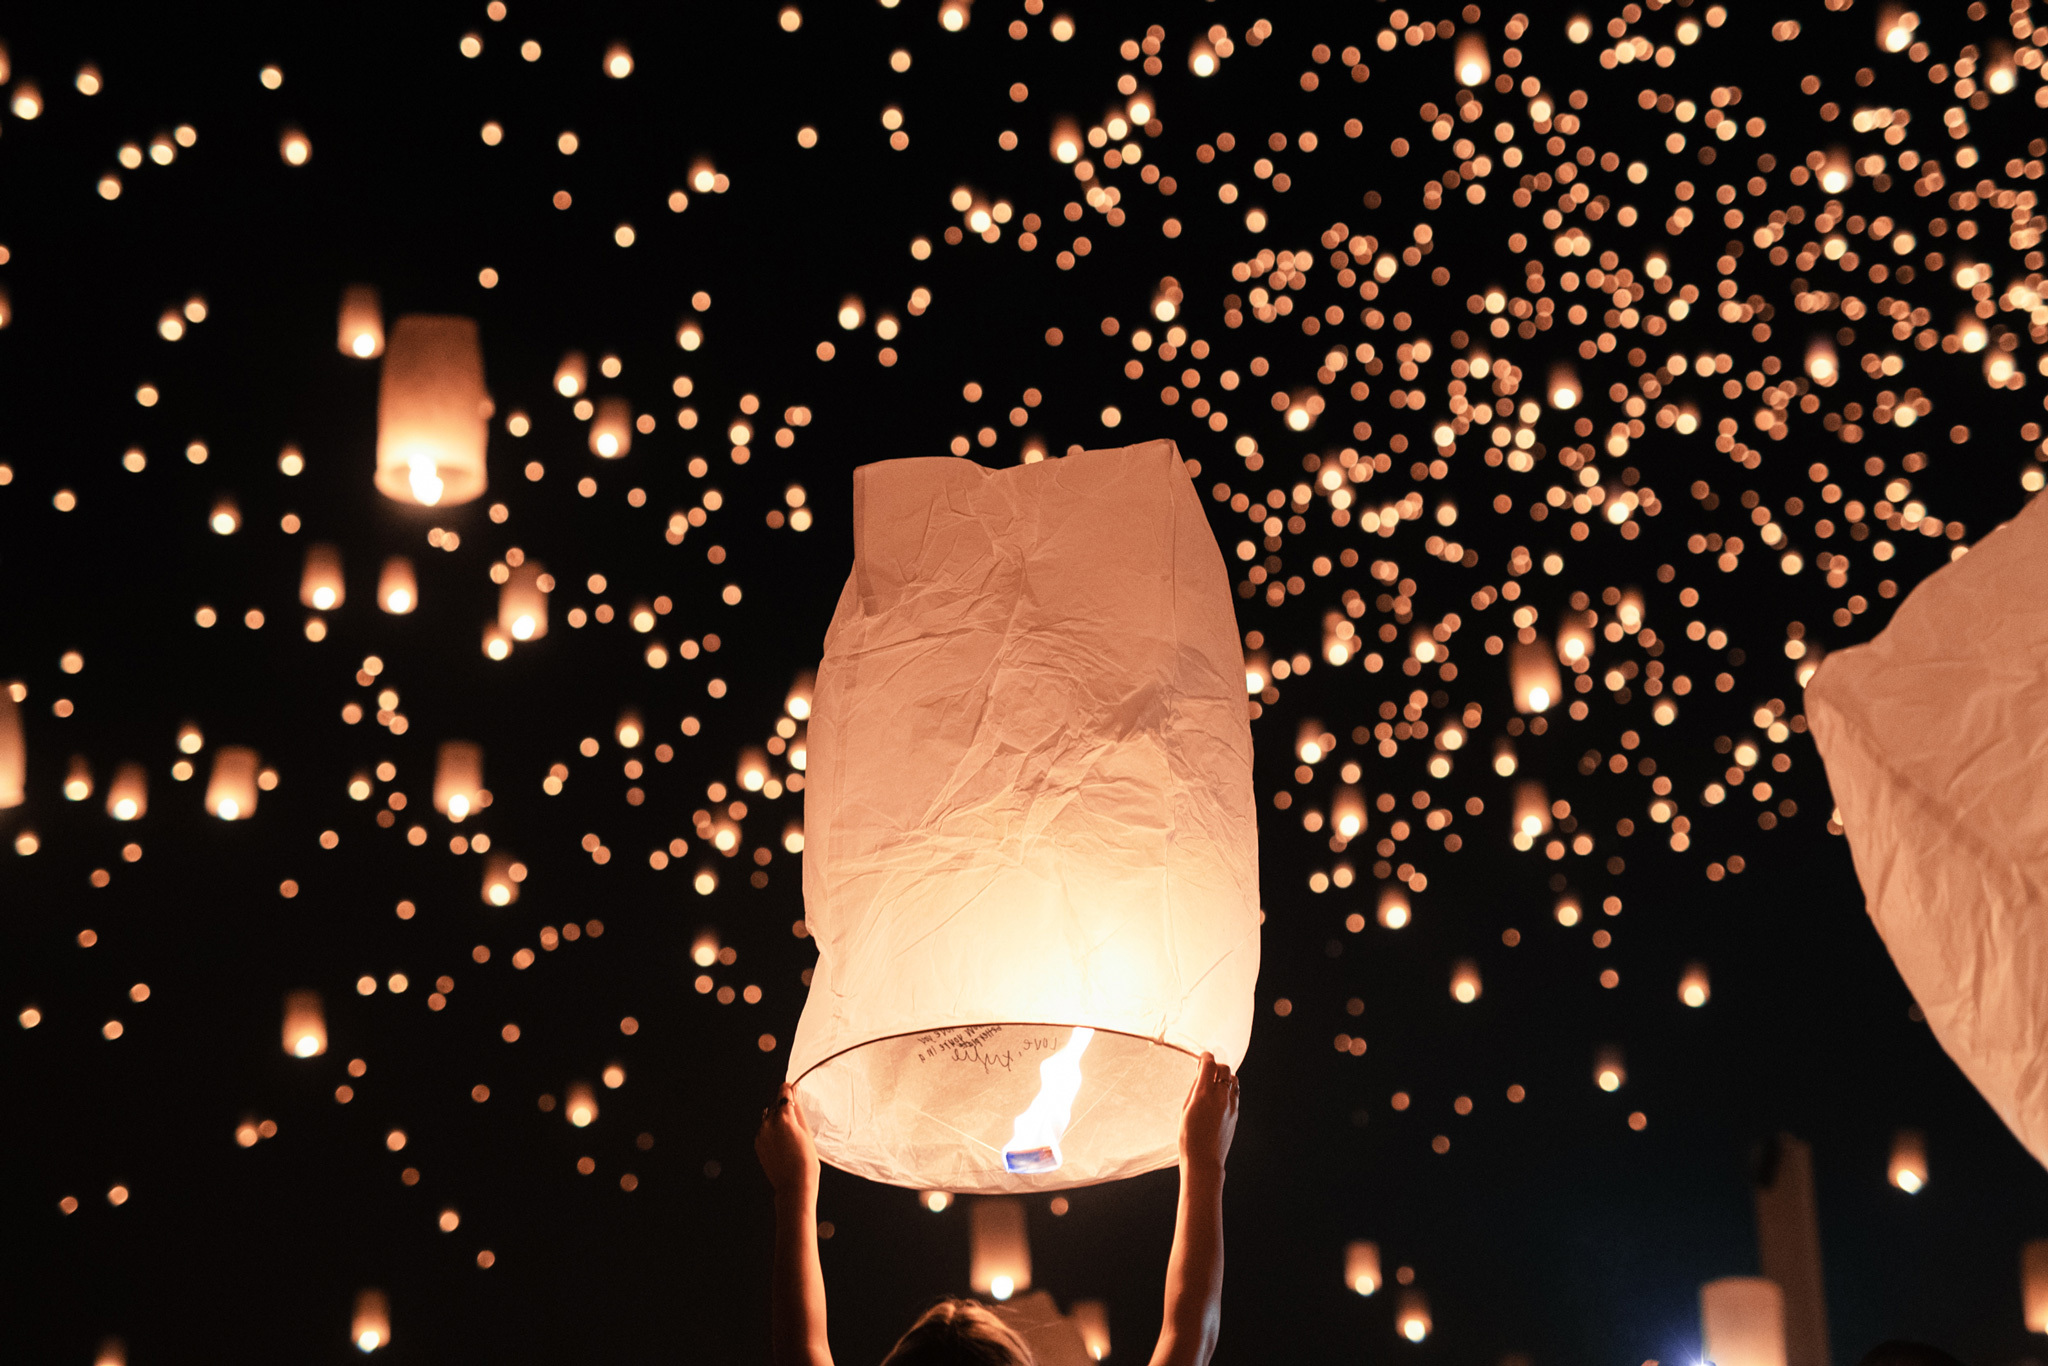 arizona lantern festival 2021